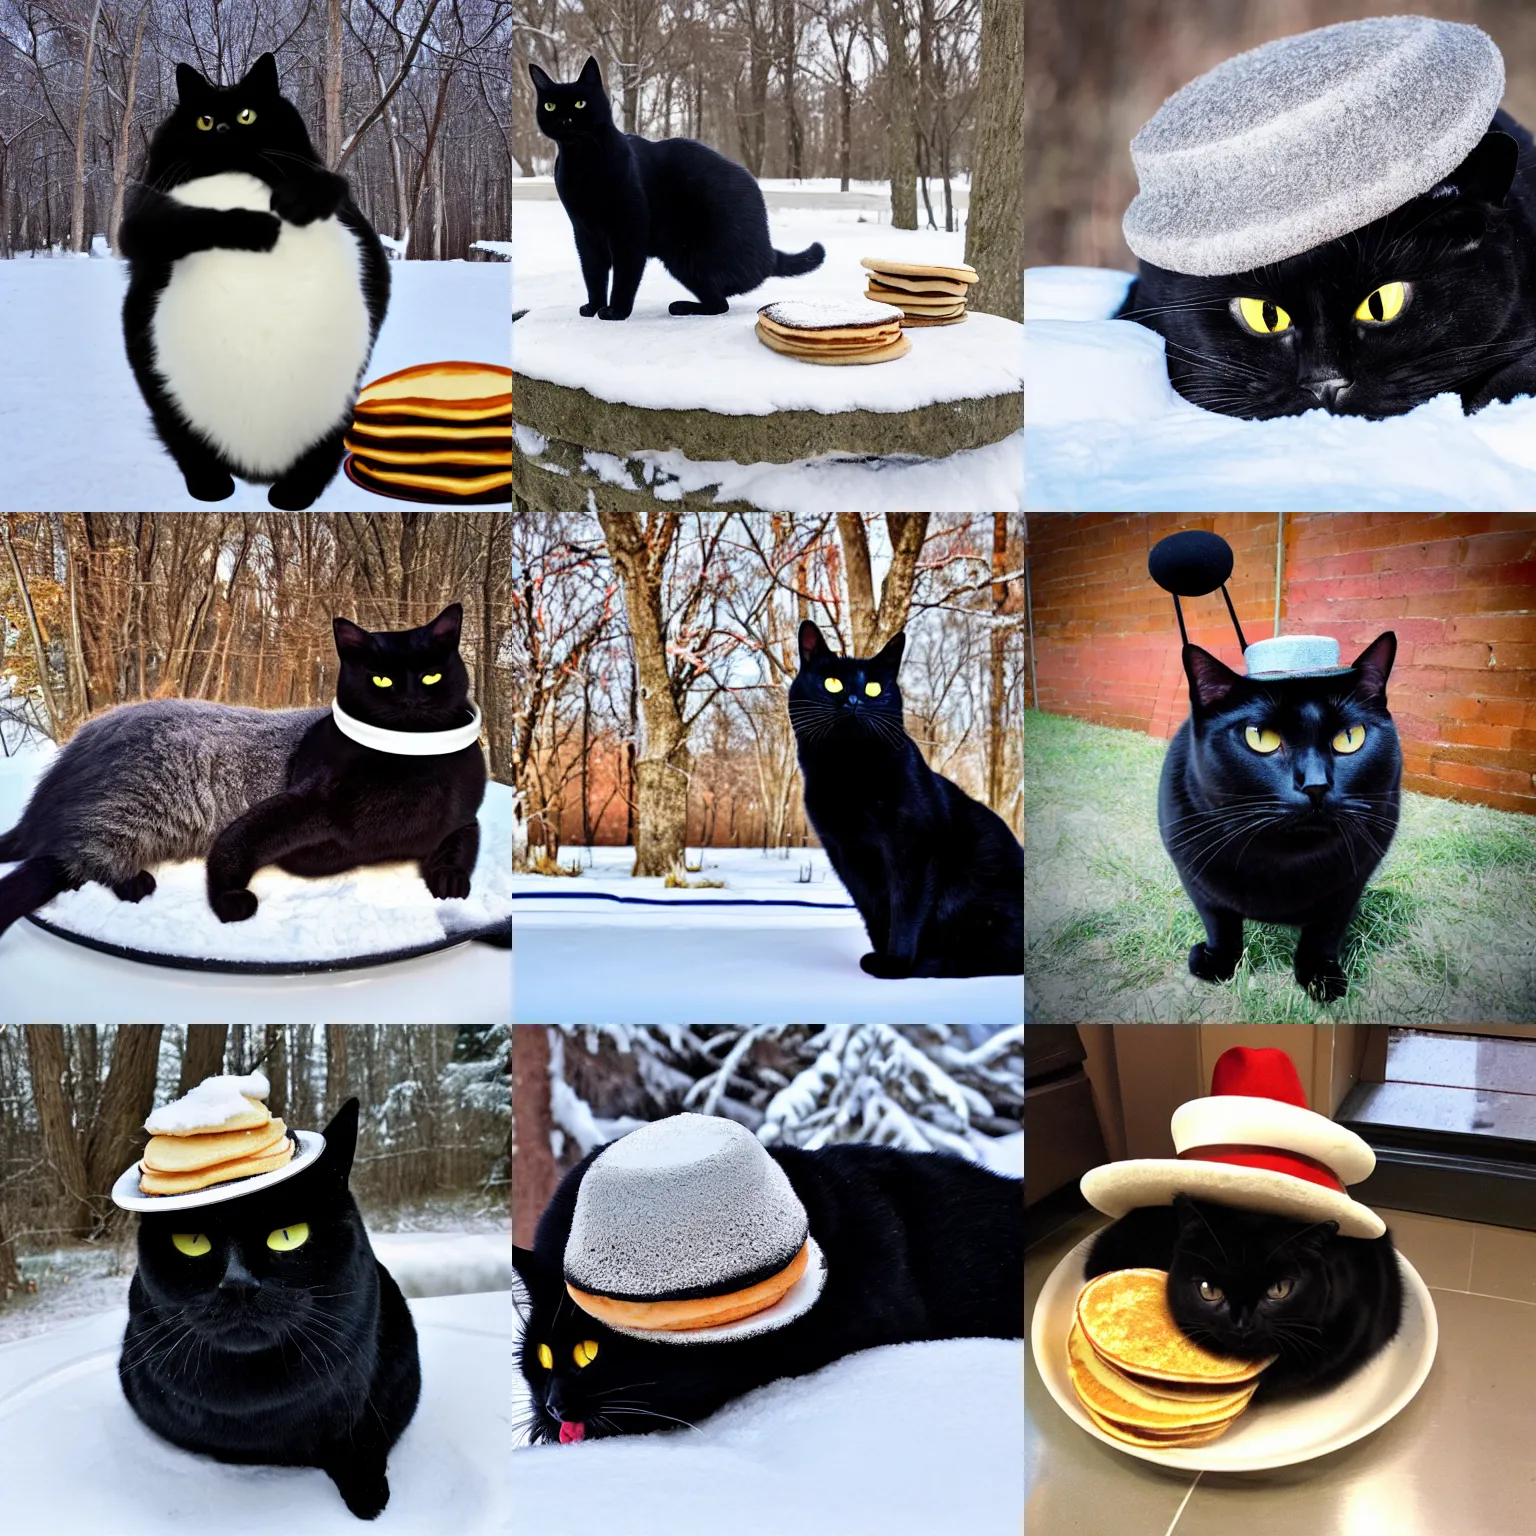 Prompt: fat black cat with pancake fedora on head in Minnesota winter